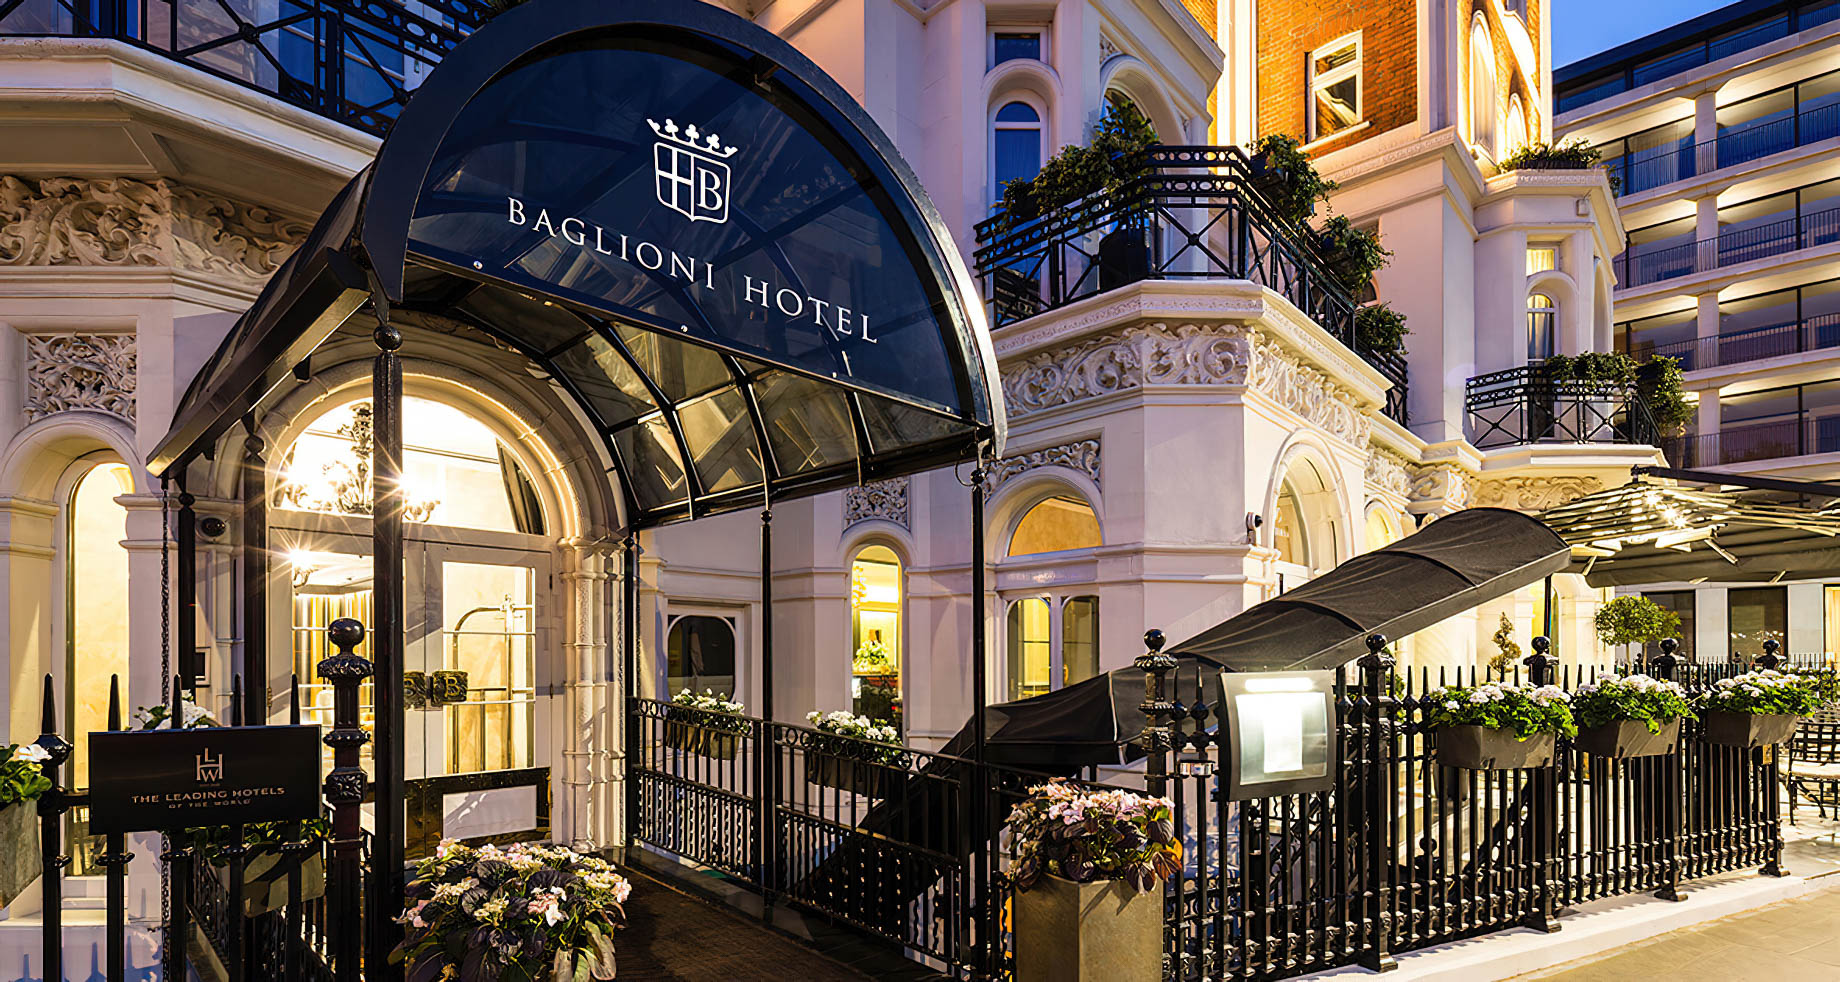 Baglioni Hotel London – South Kensington, London, United Kingdom – Exterior Entrance Night